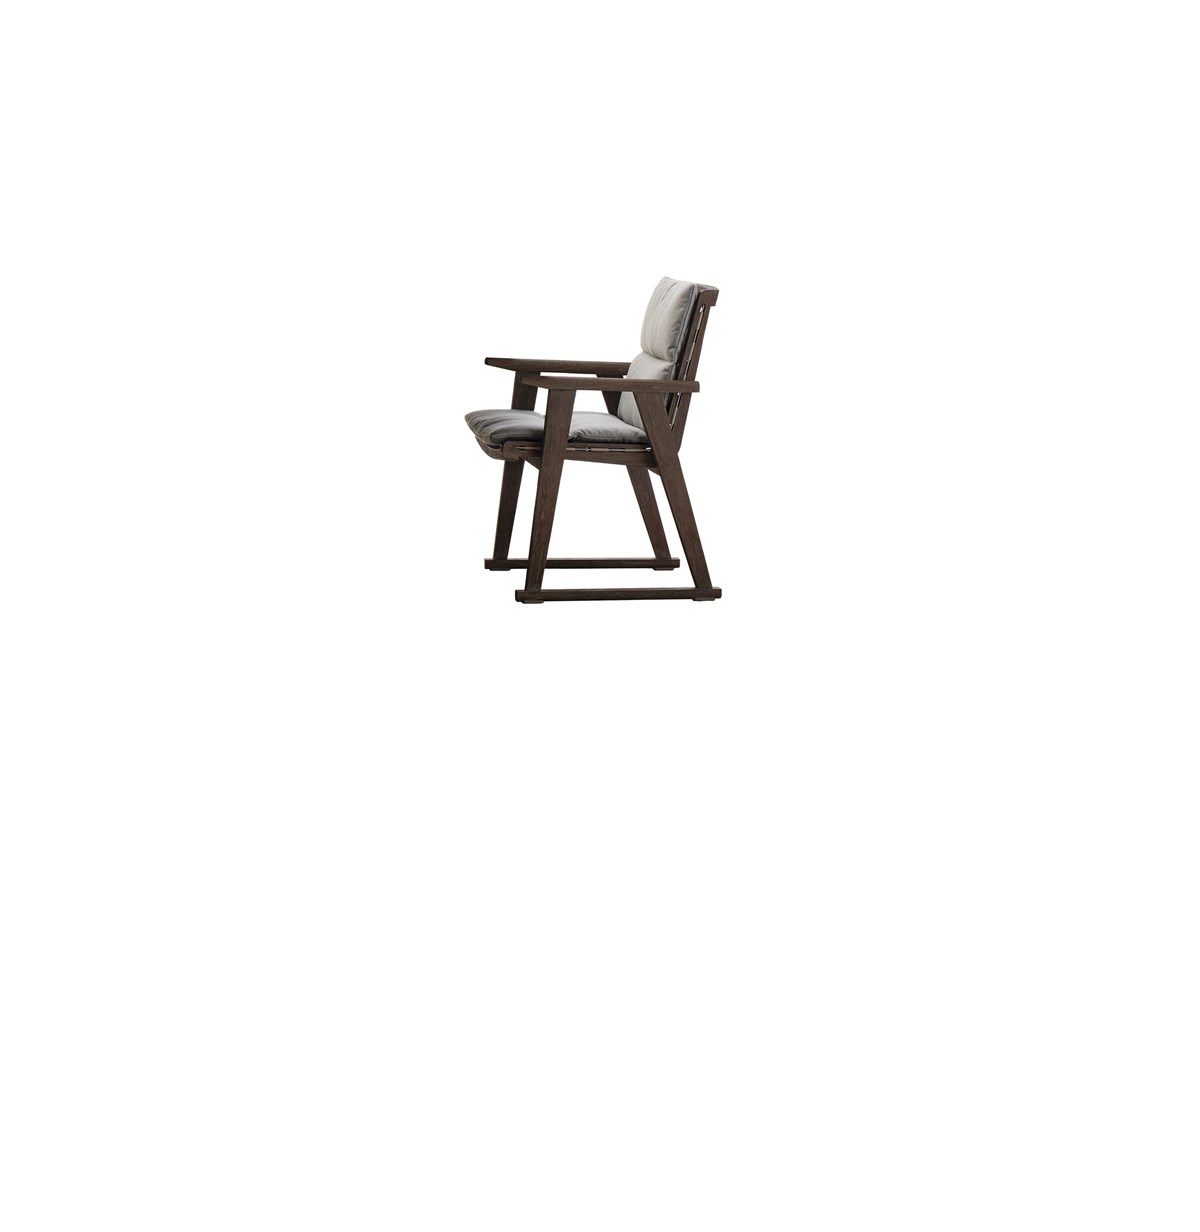 Thisslider 0 53117 Outdoor Chair Gio 01 Miniatura 1